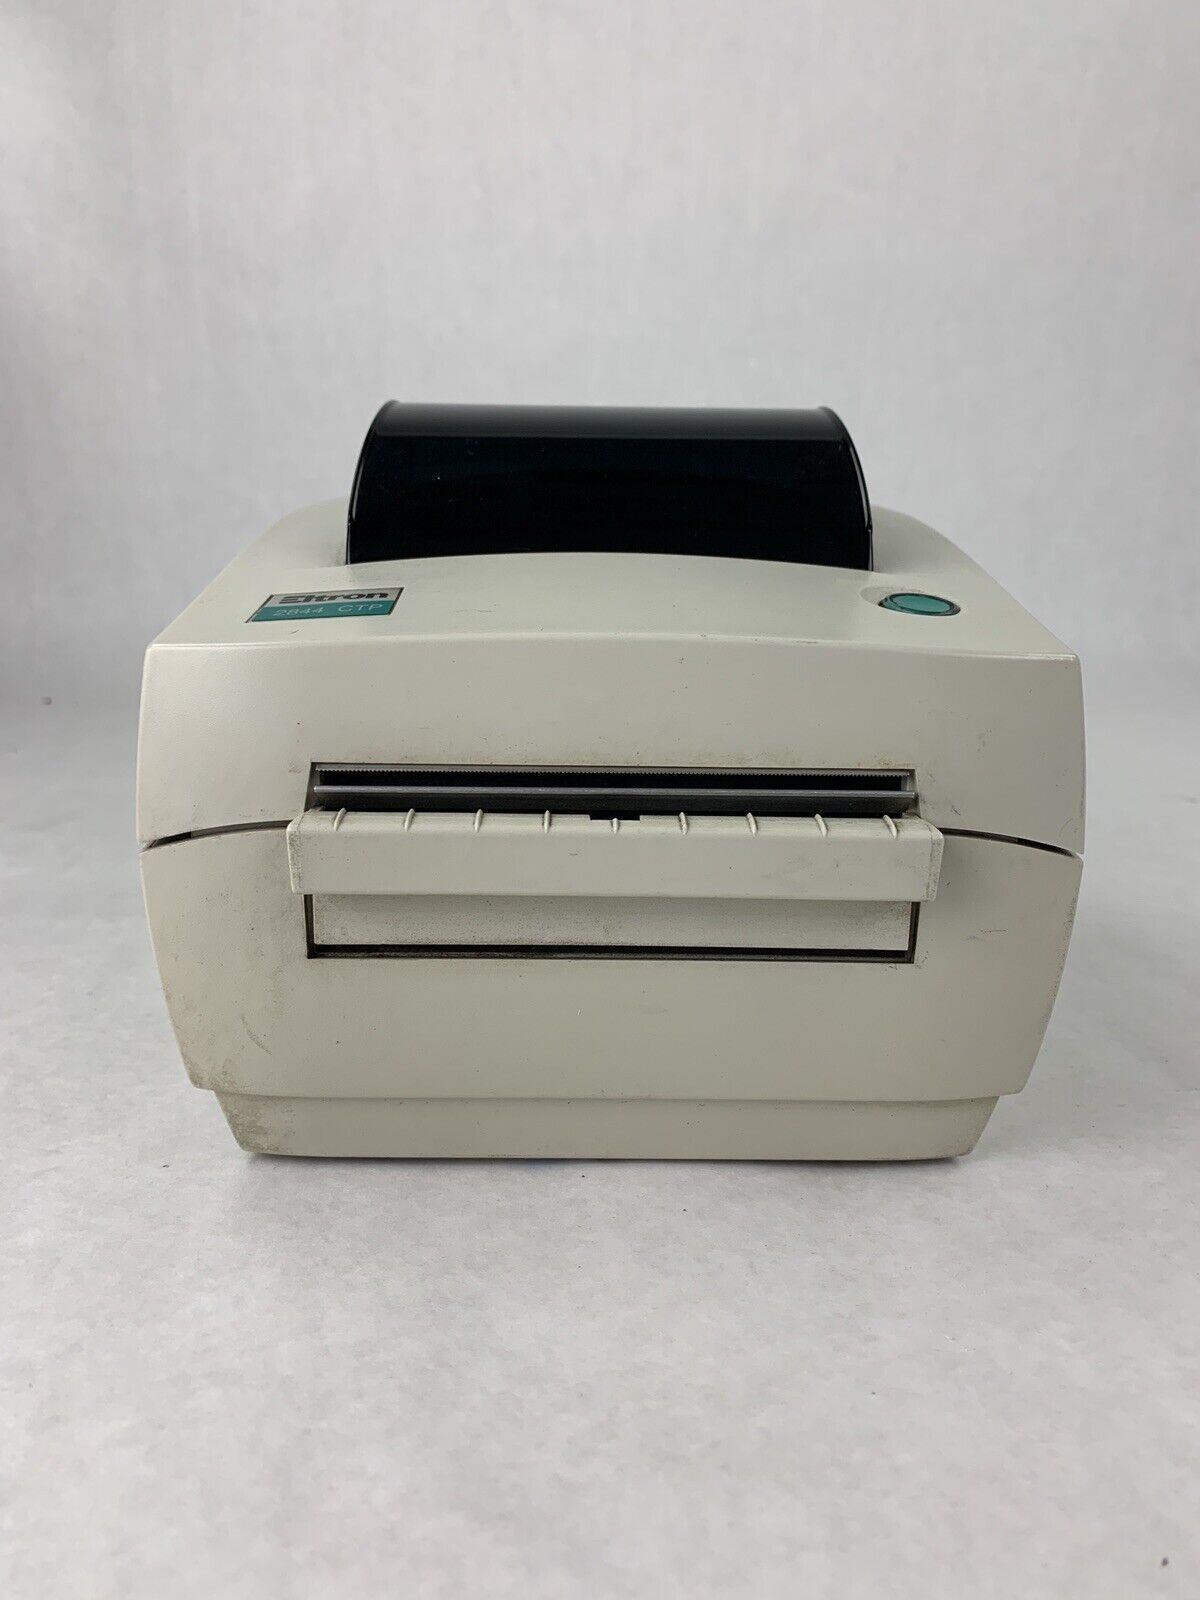 Eltron 2844 CTP Direct Thermal Label Shipping Printer Zebra UPS LP2844 Tested